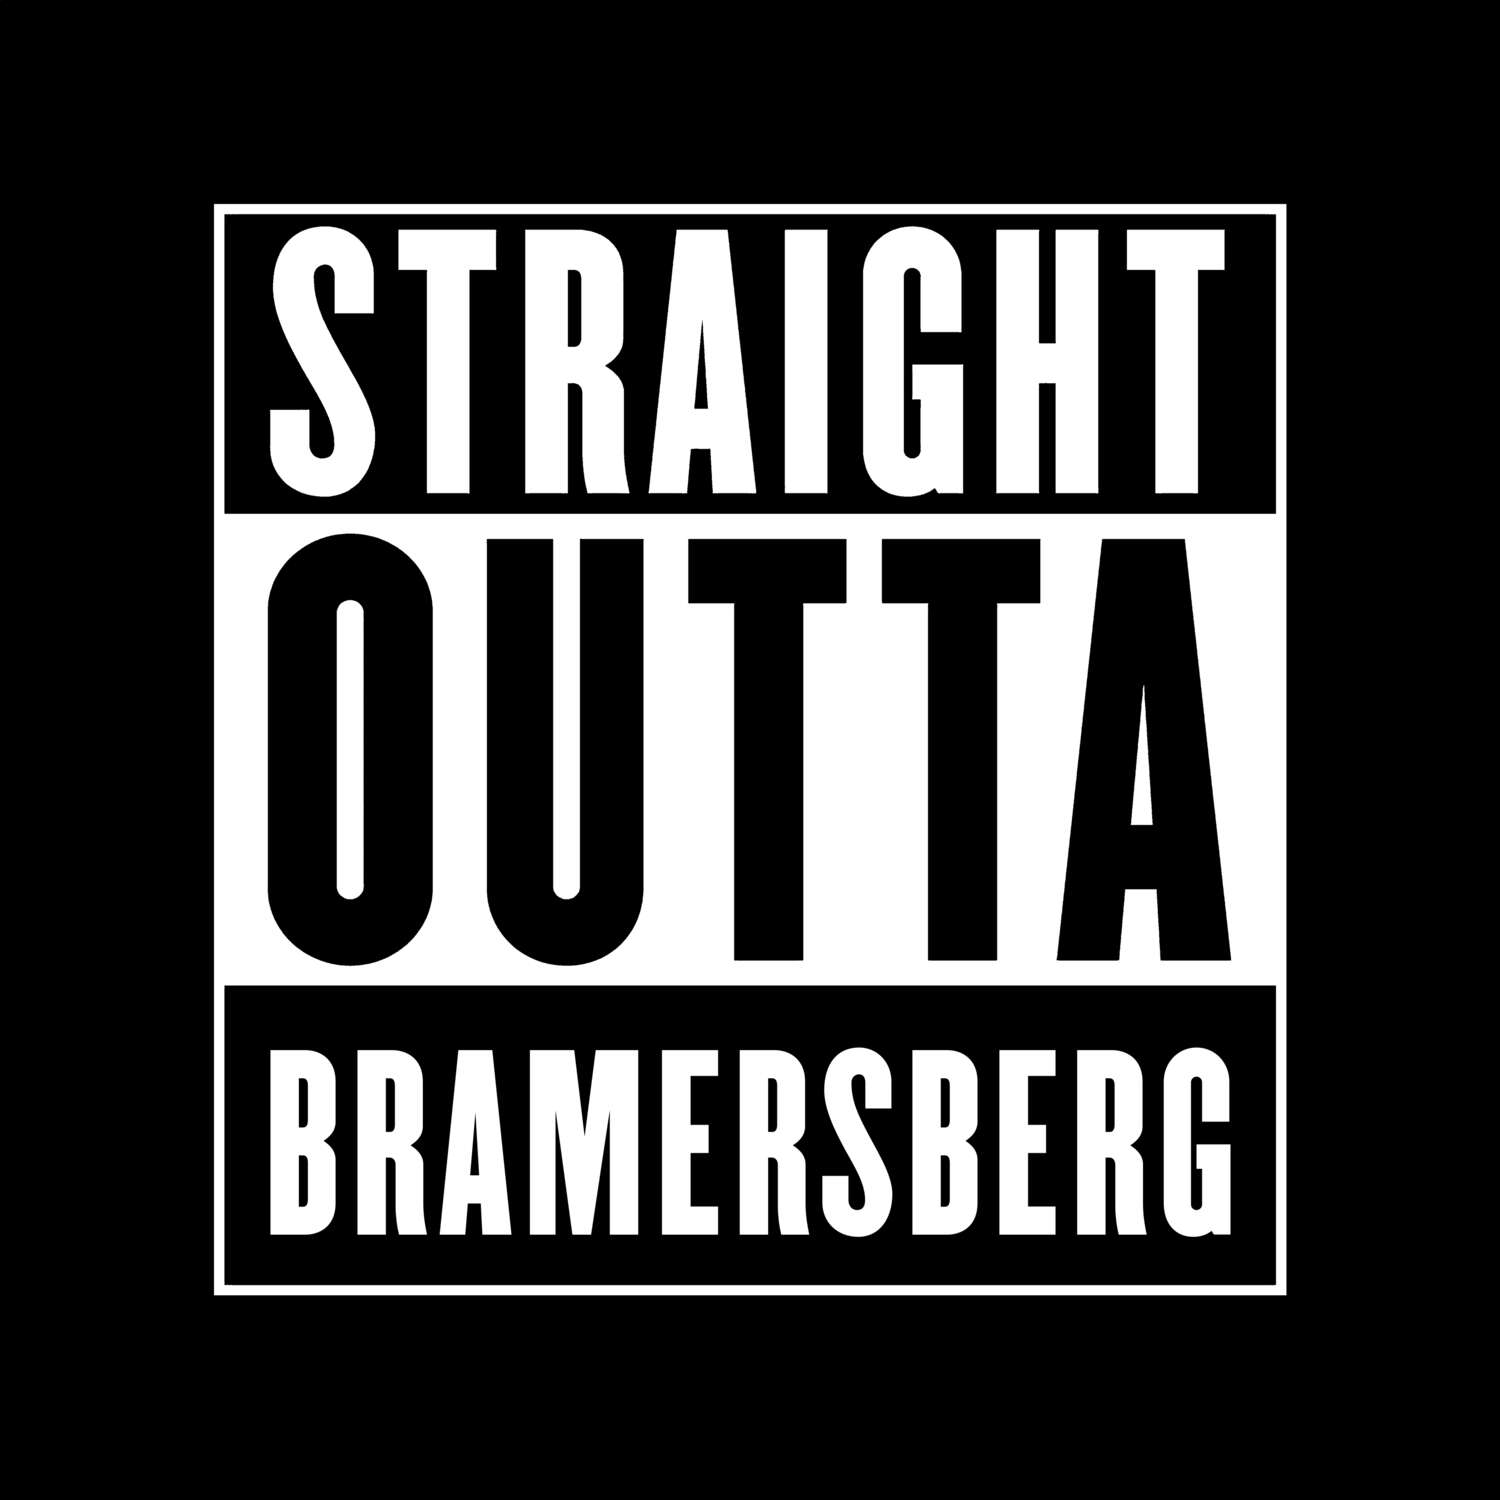 Bramersberg T-Shirt »Straight Outta«